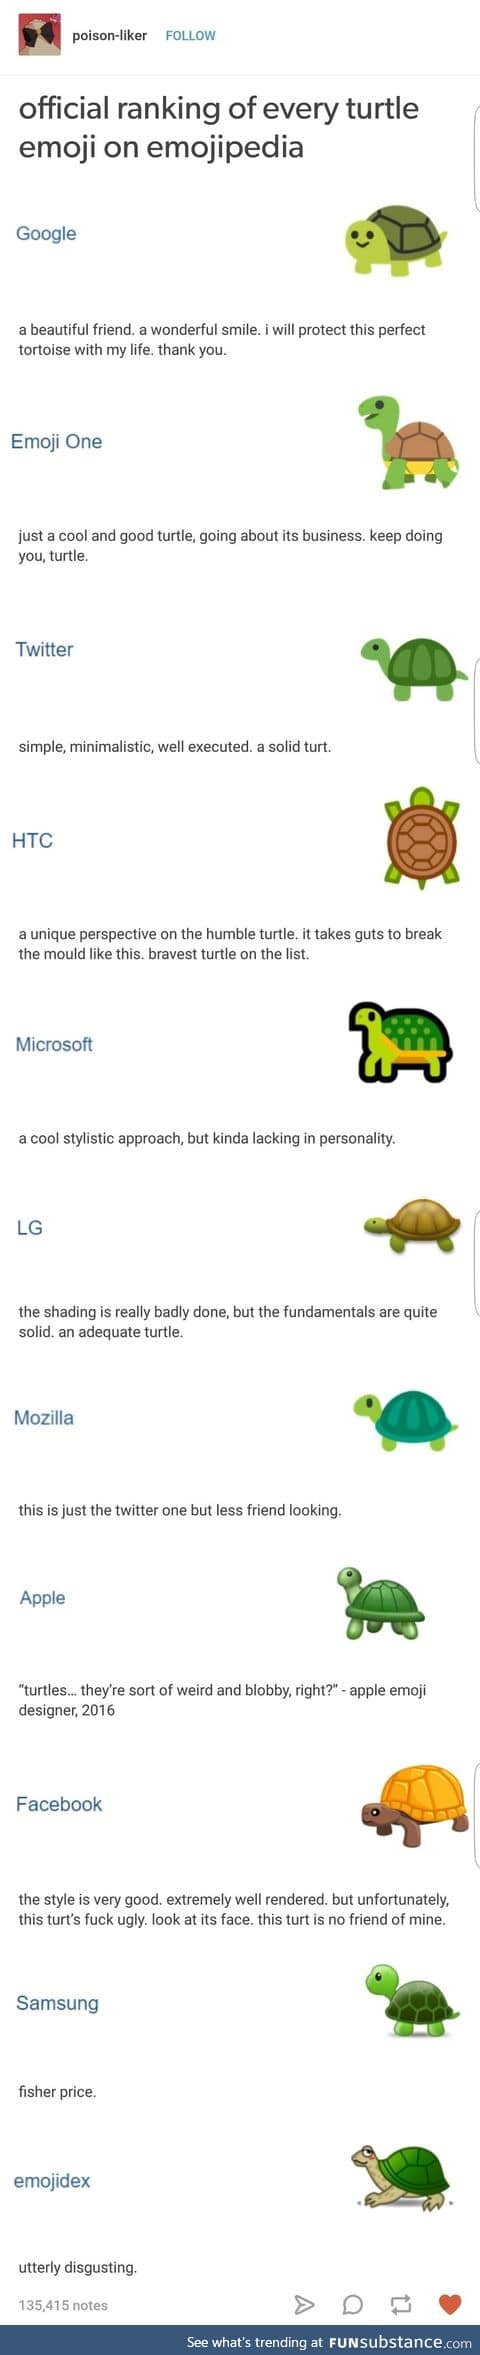 Turtle ranking